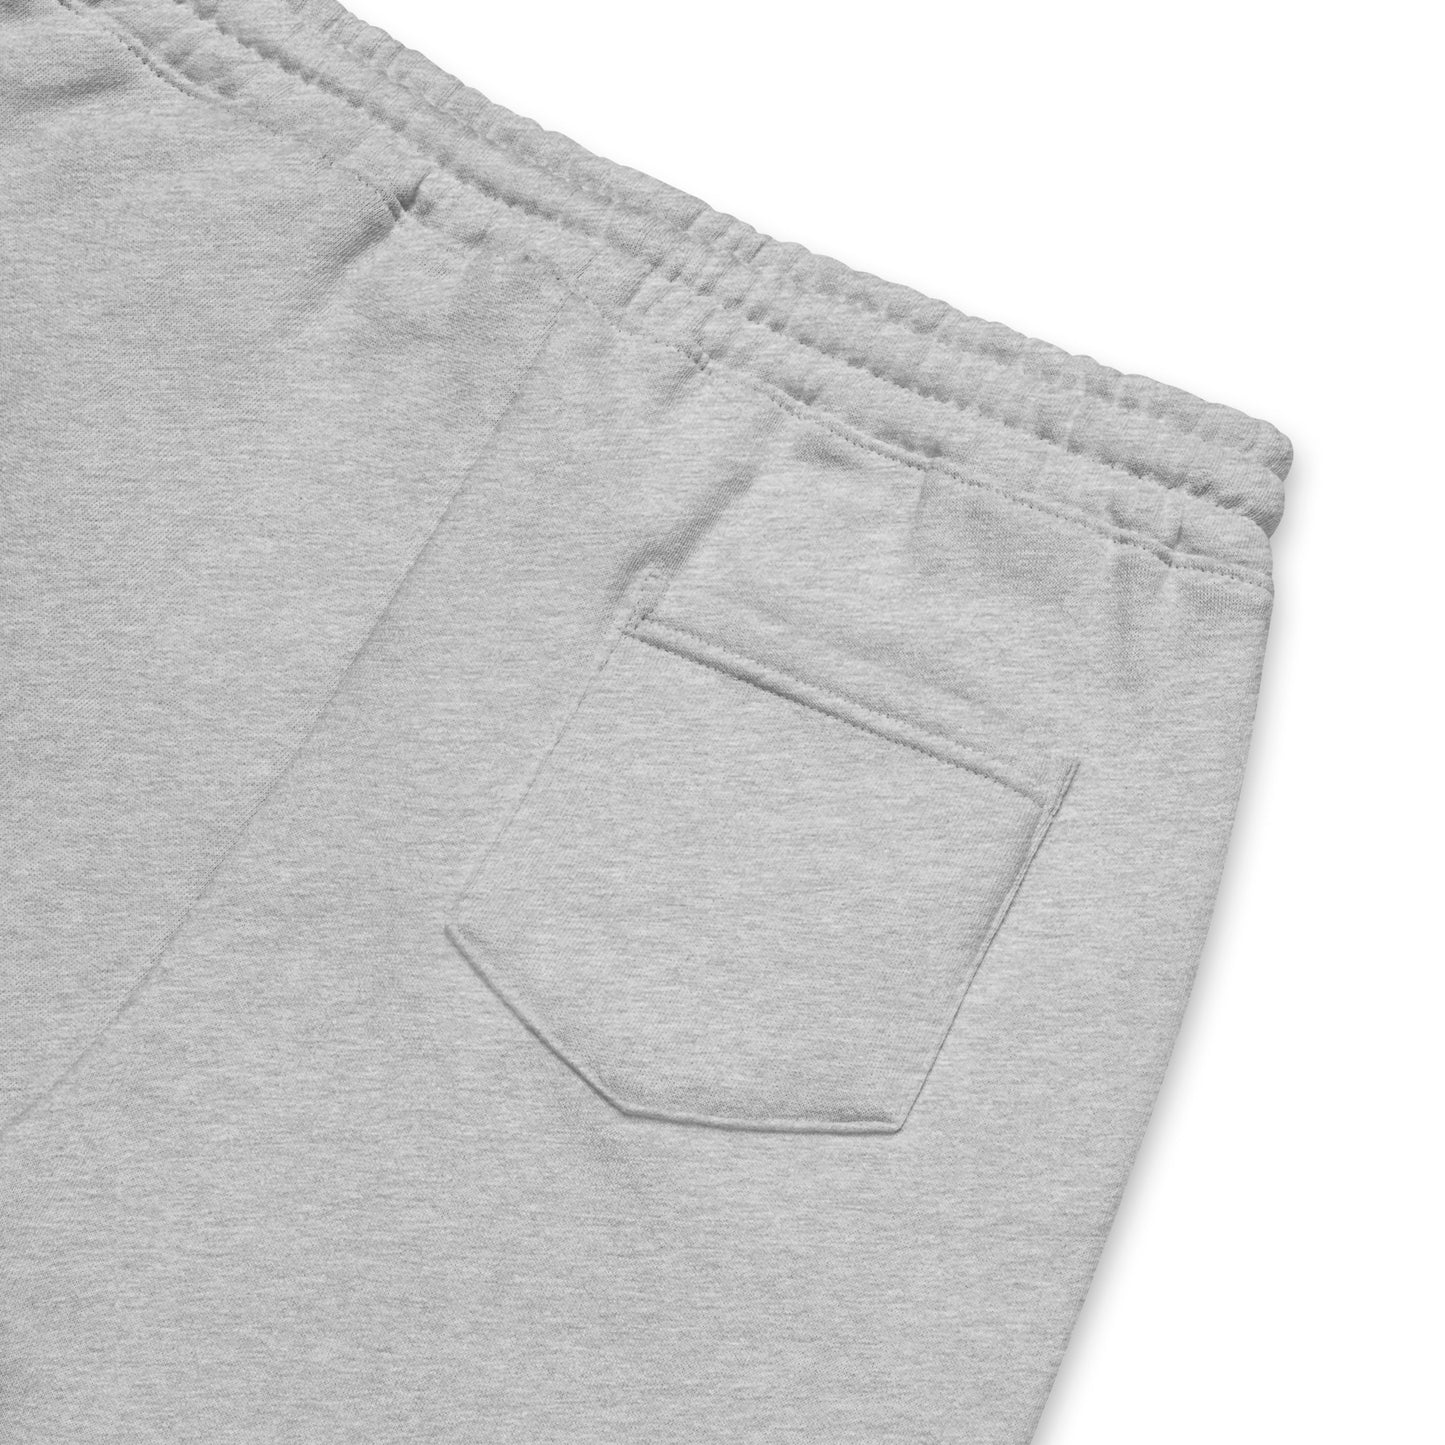 Men's Fleece Shorts "Megapolis"